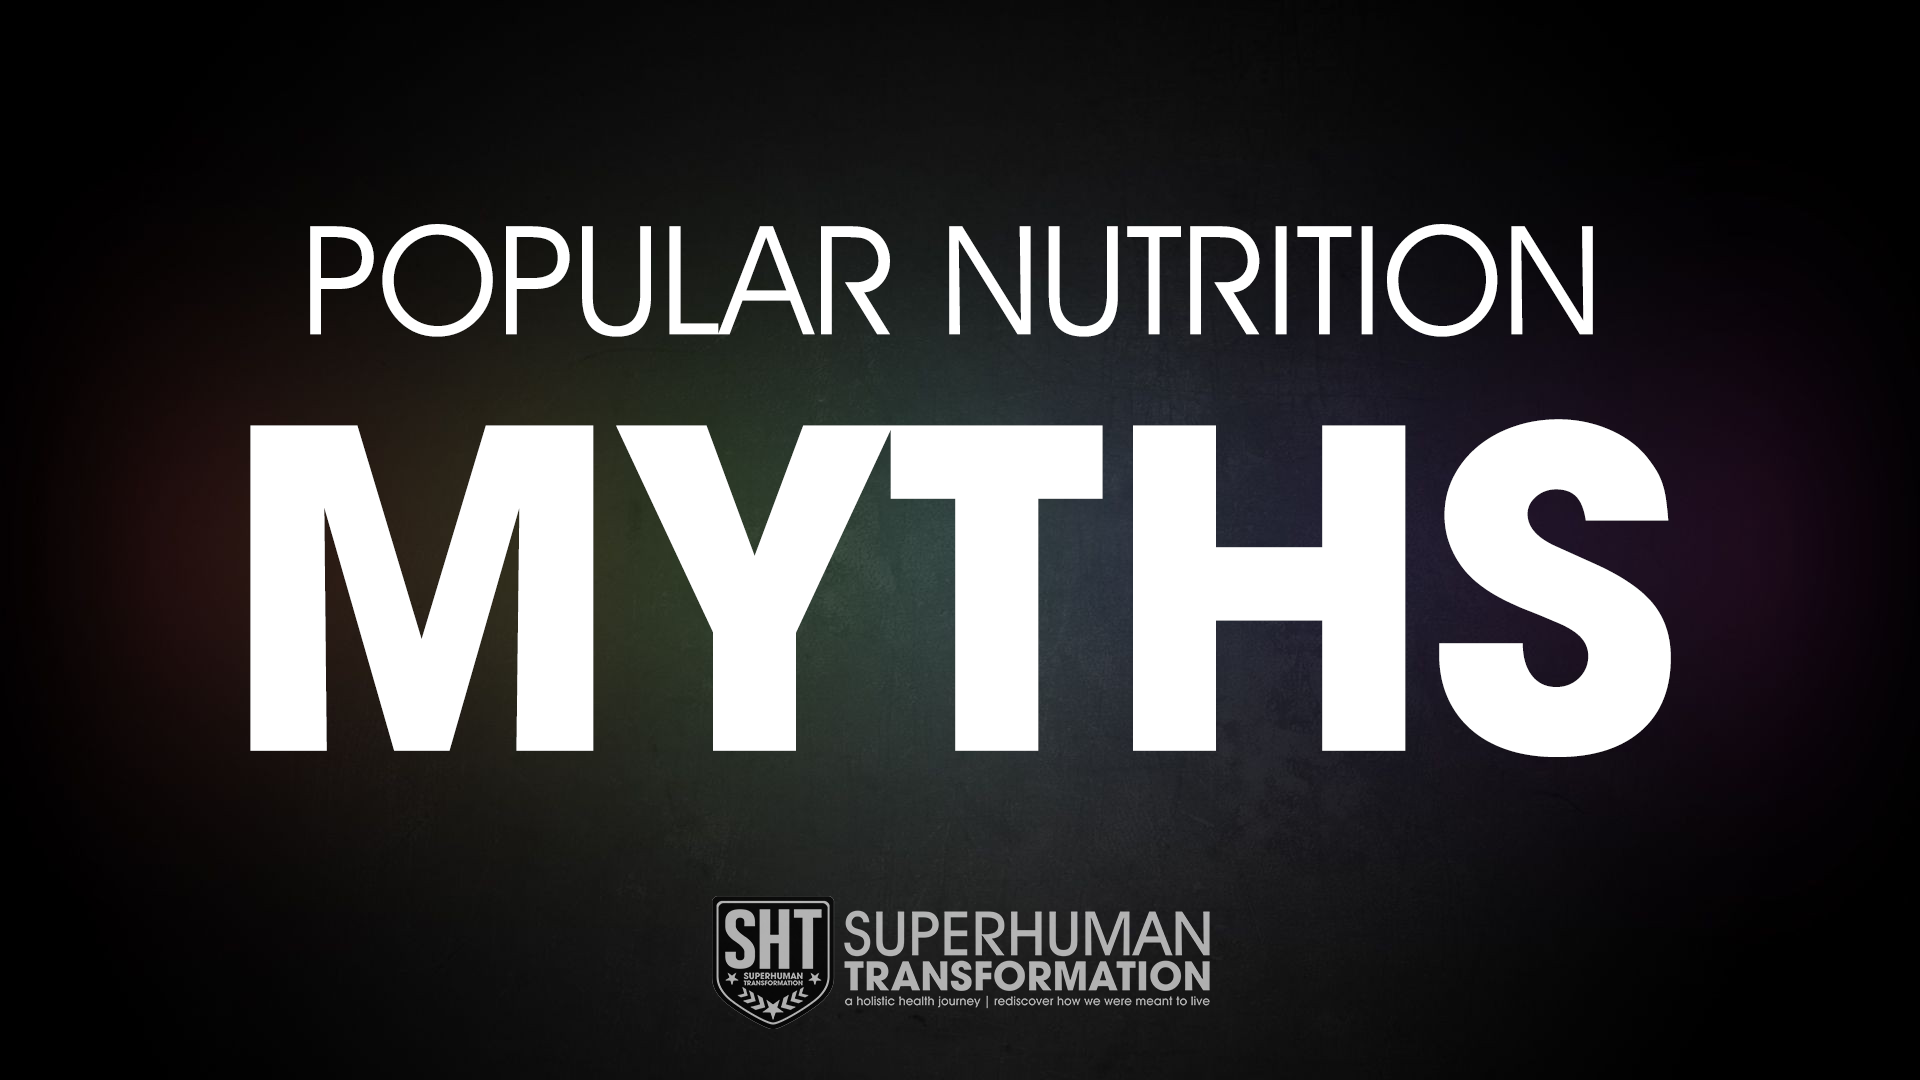 popular nutrition myths